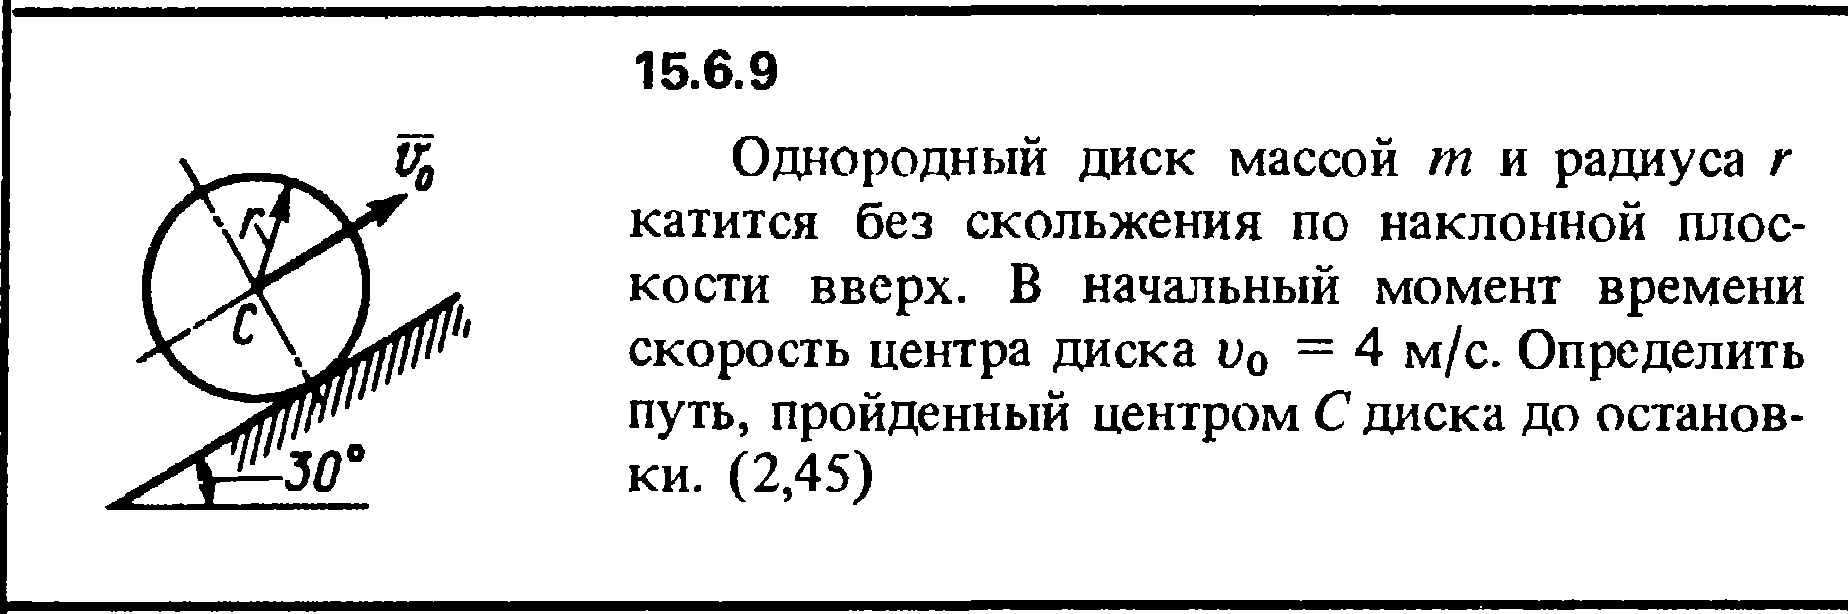 Решение задачи 15.6.9 из сборника Кепе О.Е. 1989 года